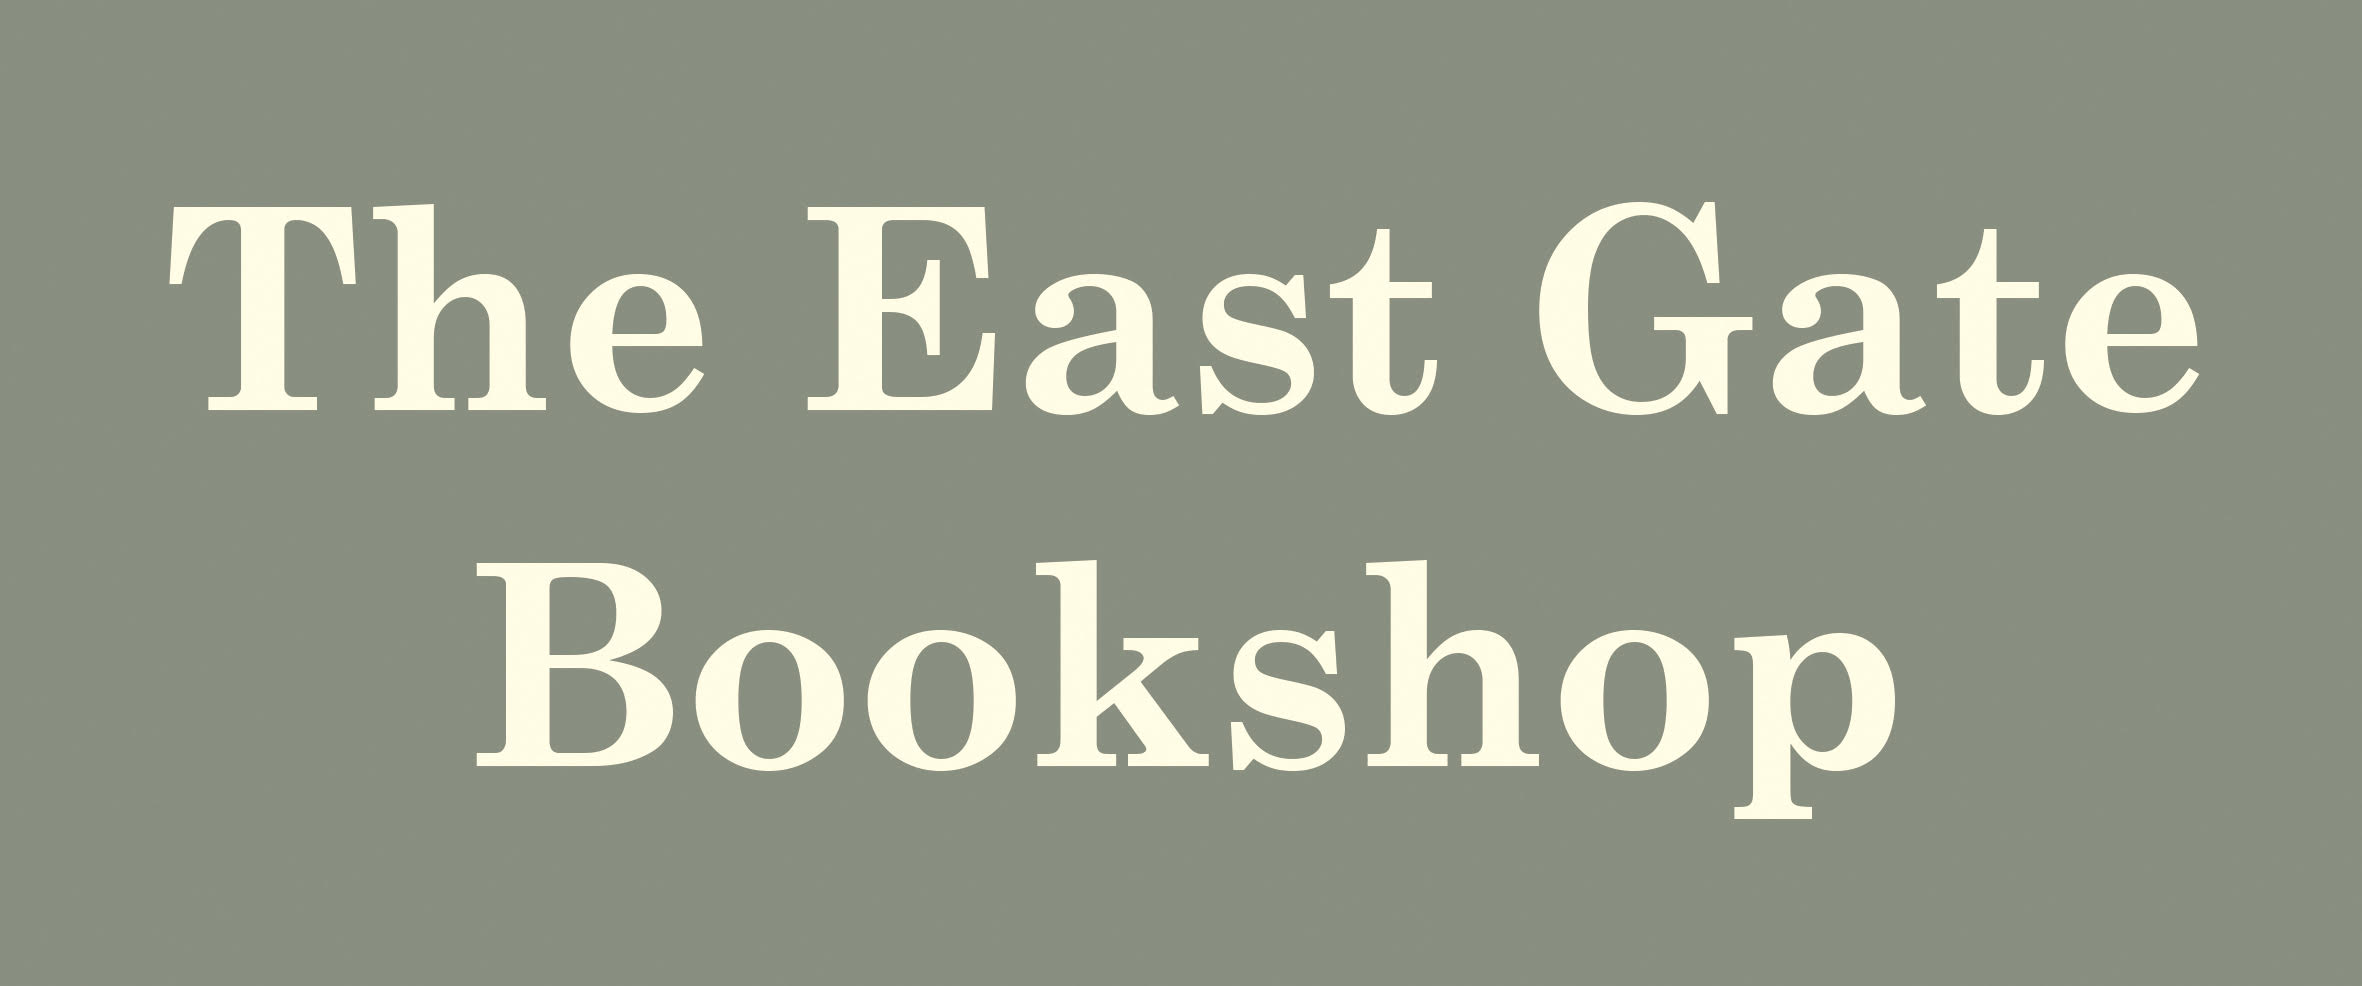 The East Gate Bookshop